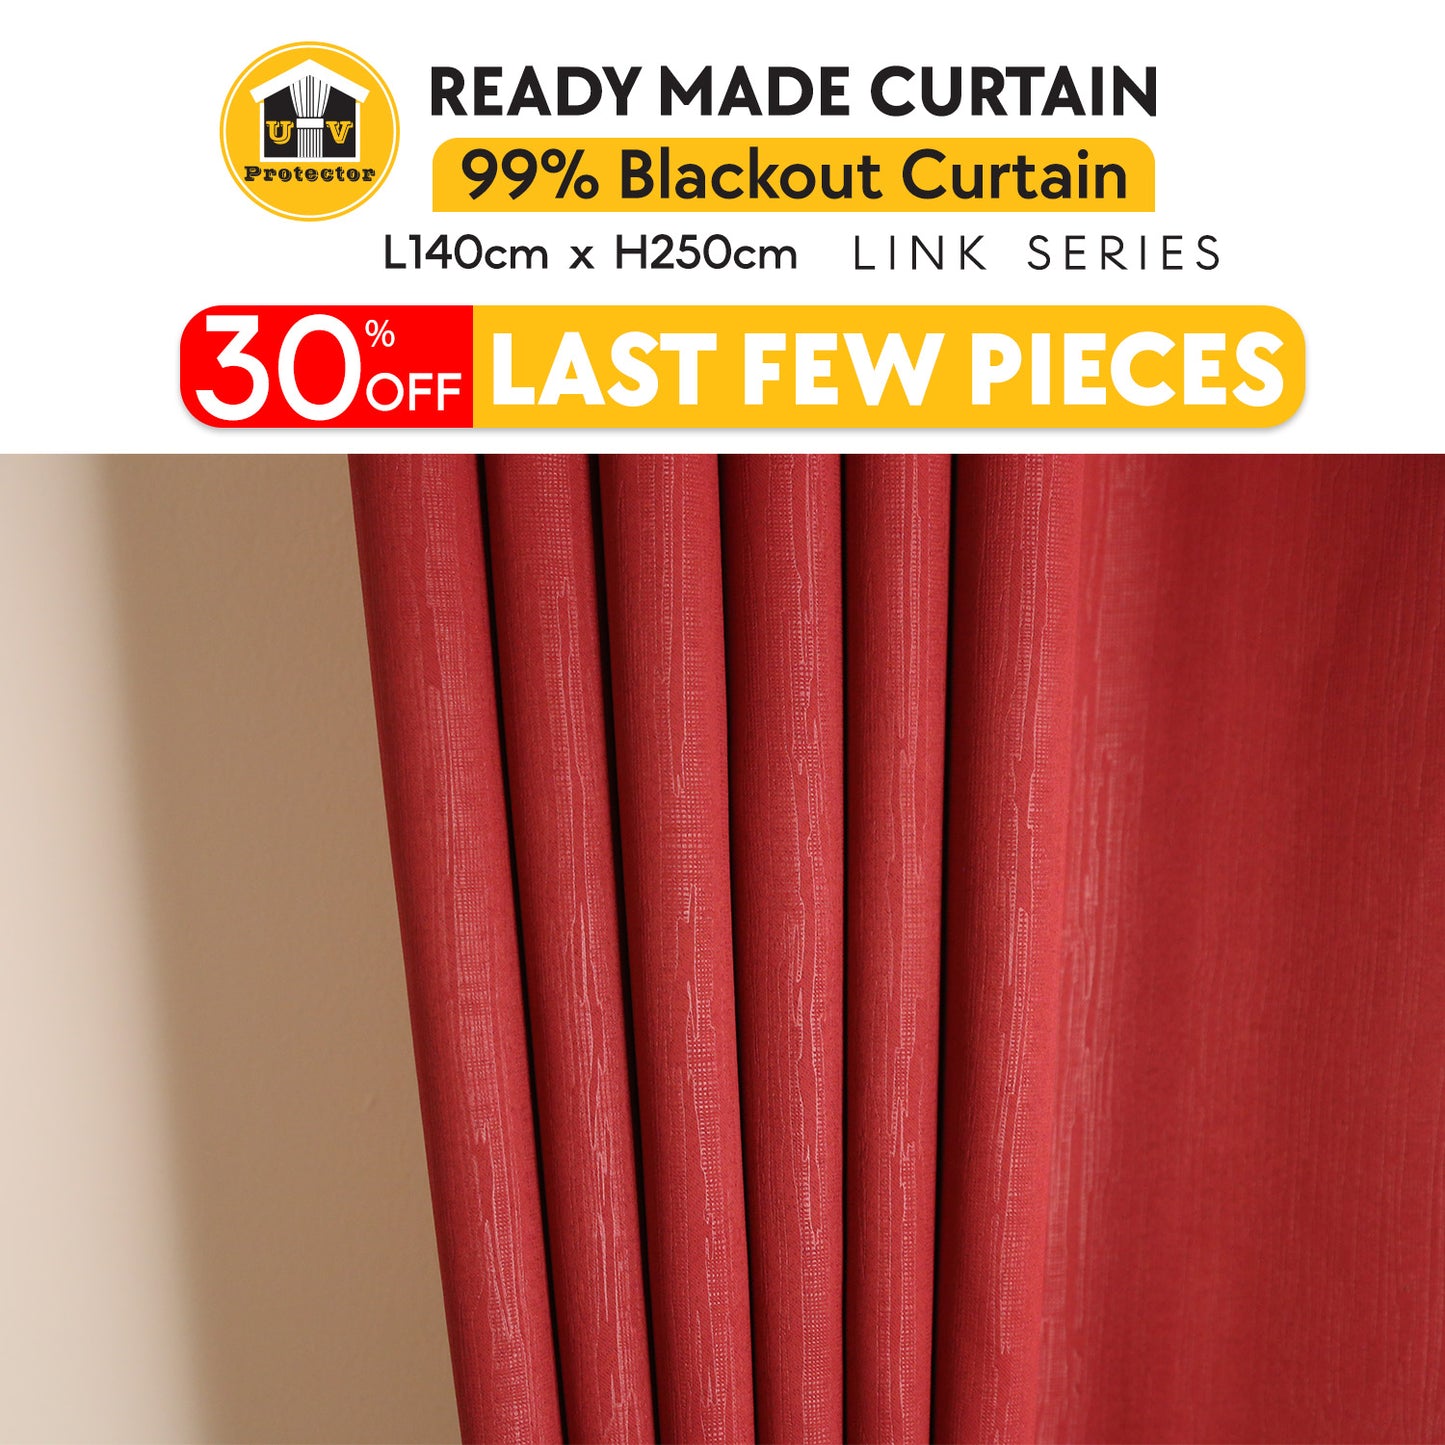 UVP Curtain Link Series Langsir 99% Blackout Jenis Ring L140cmxH250cm